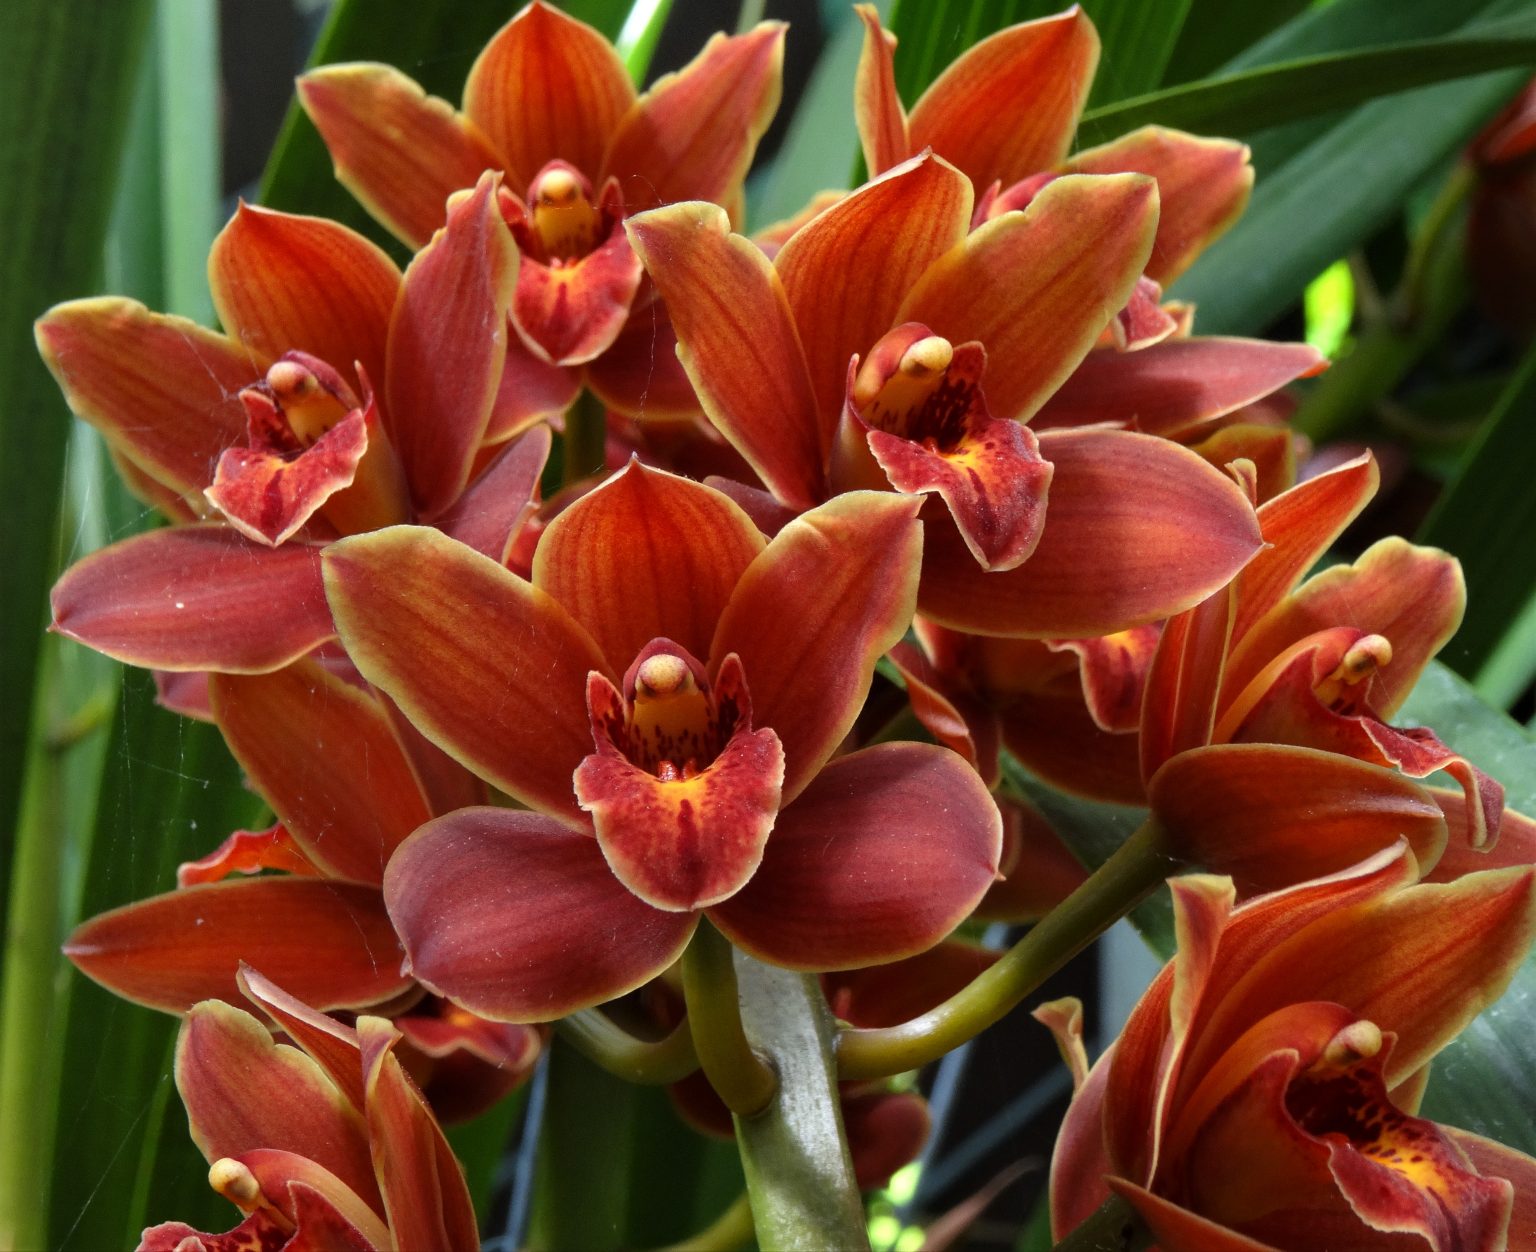 July 13 George Hatfield “breeding Cymbidiums” Diablo View Orchid Society 